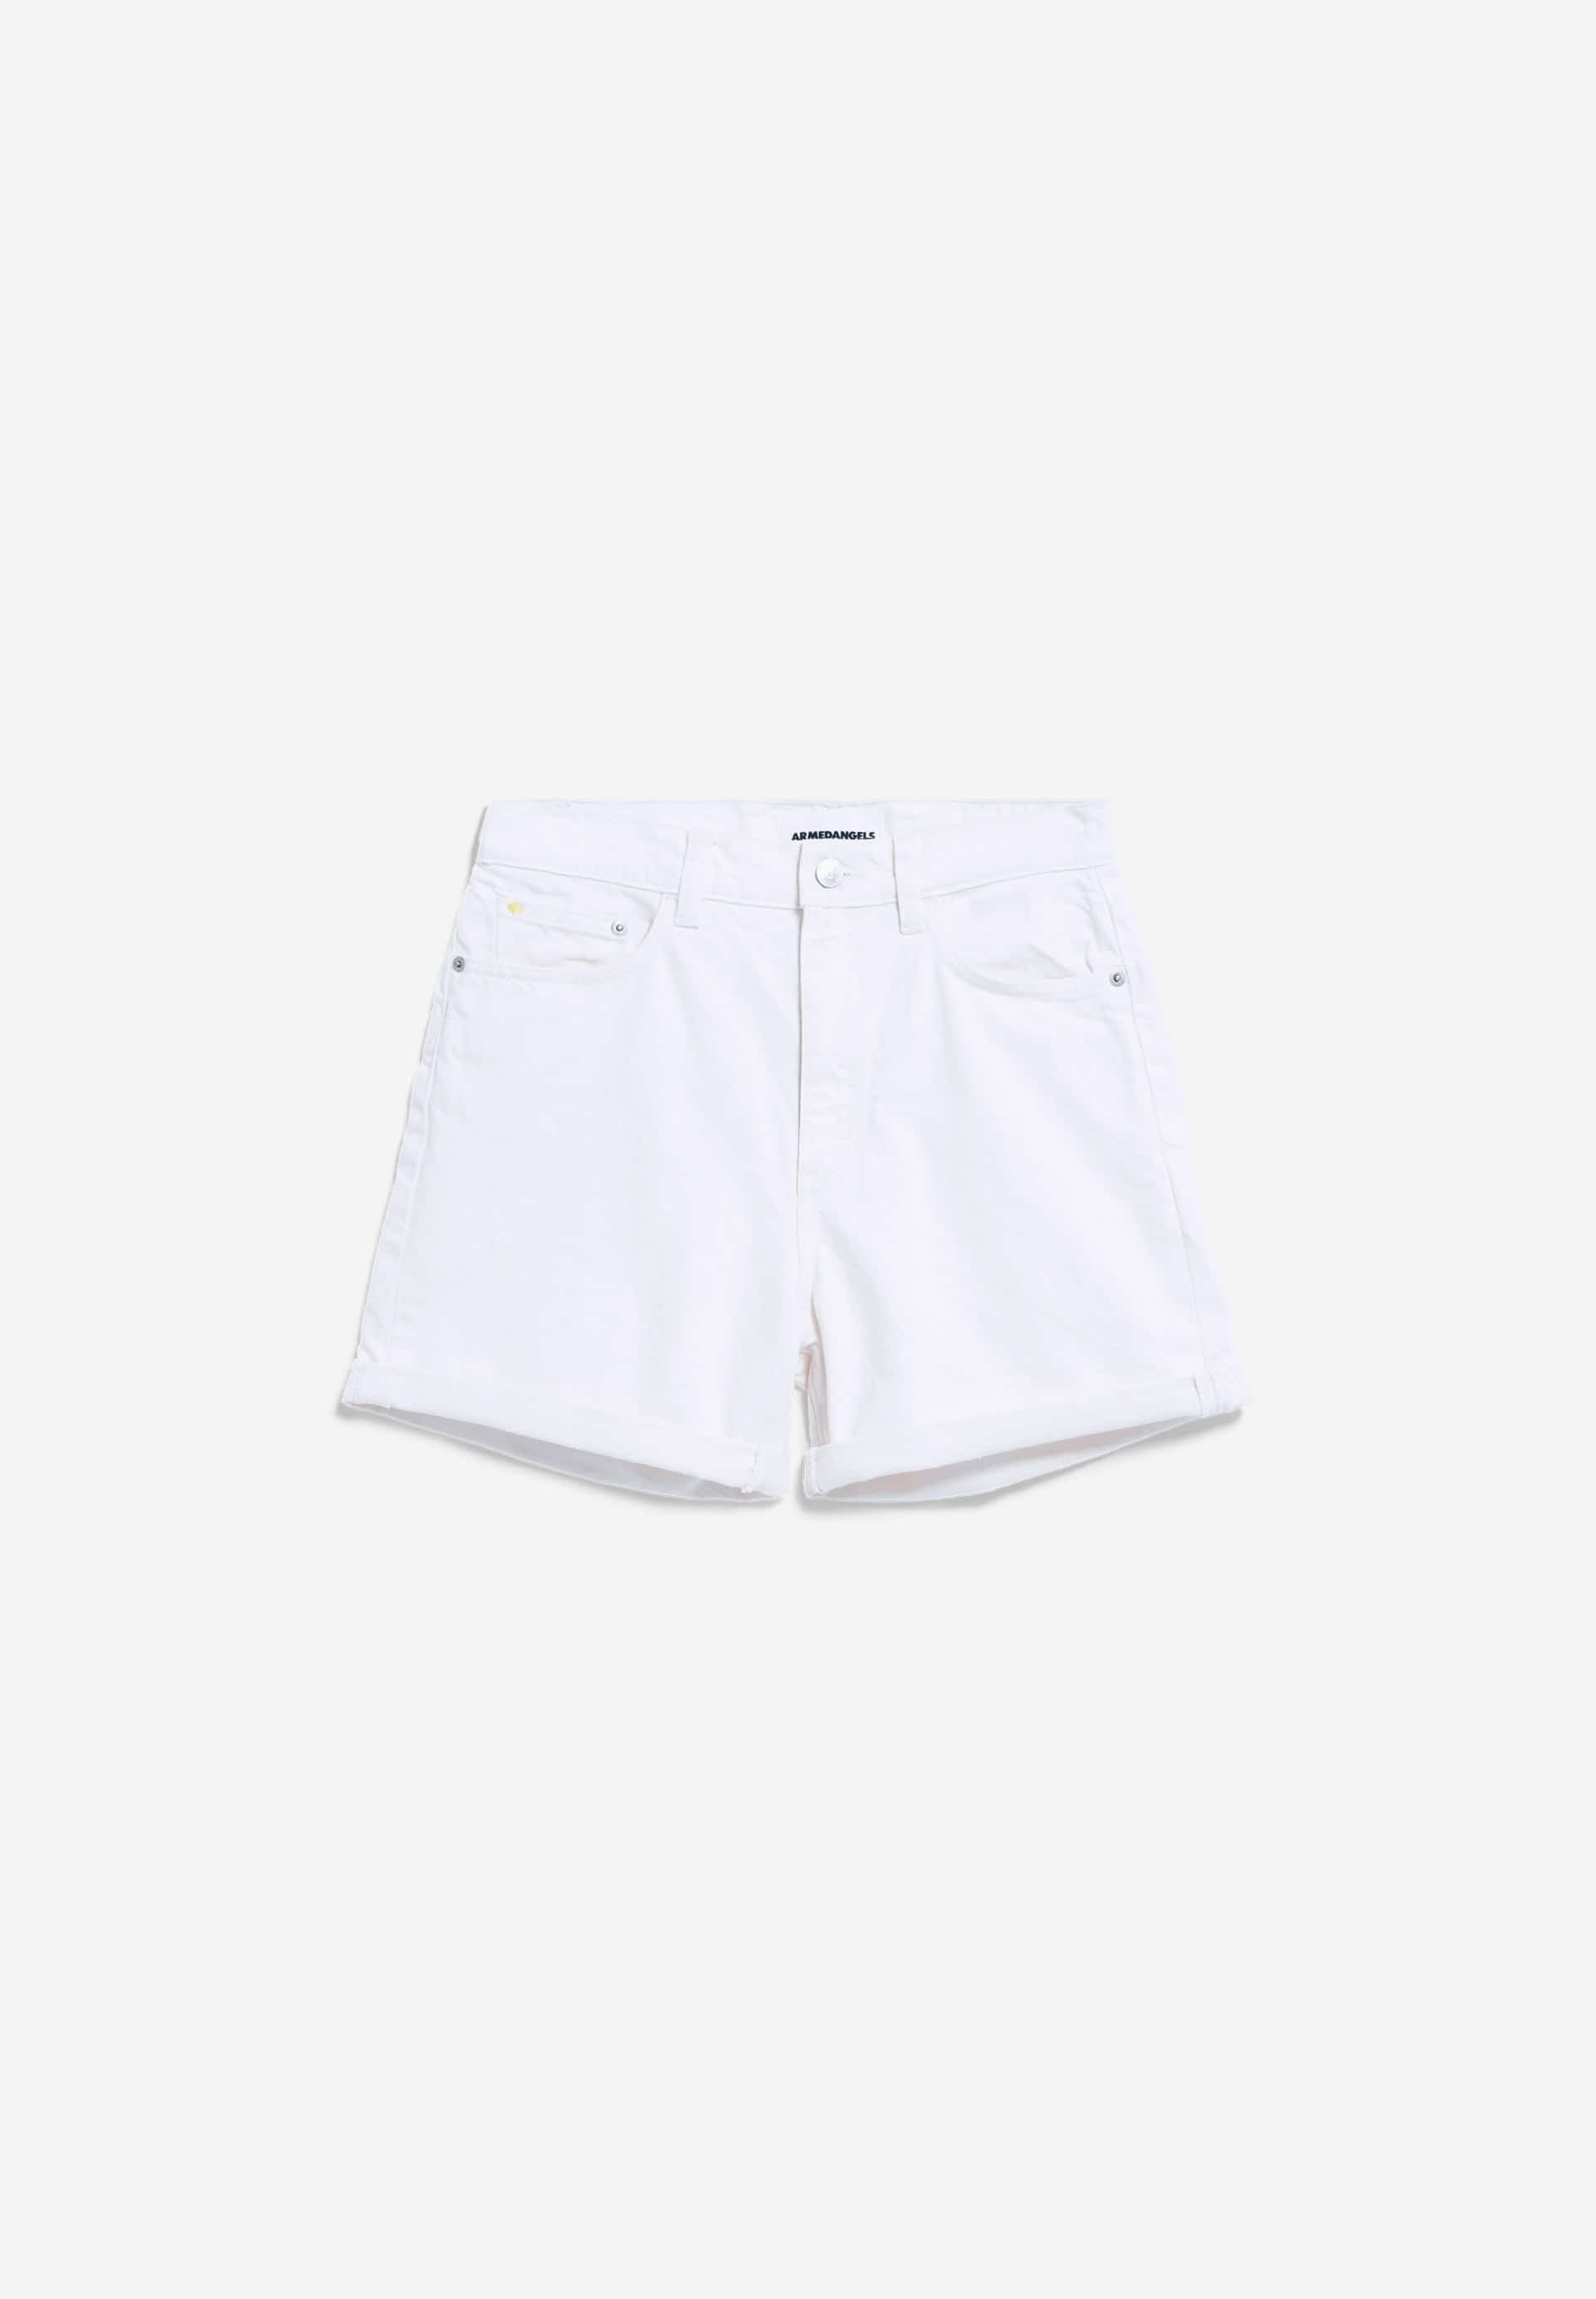 SHEAARI GMT DYE Denim Shorts made of recycled Cotton Mix